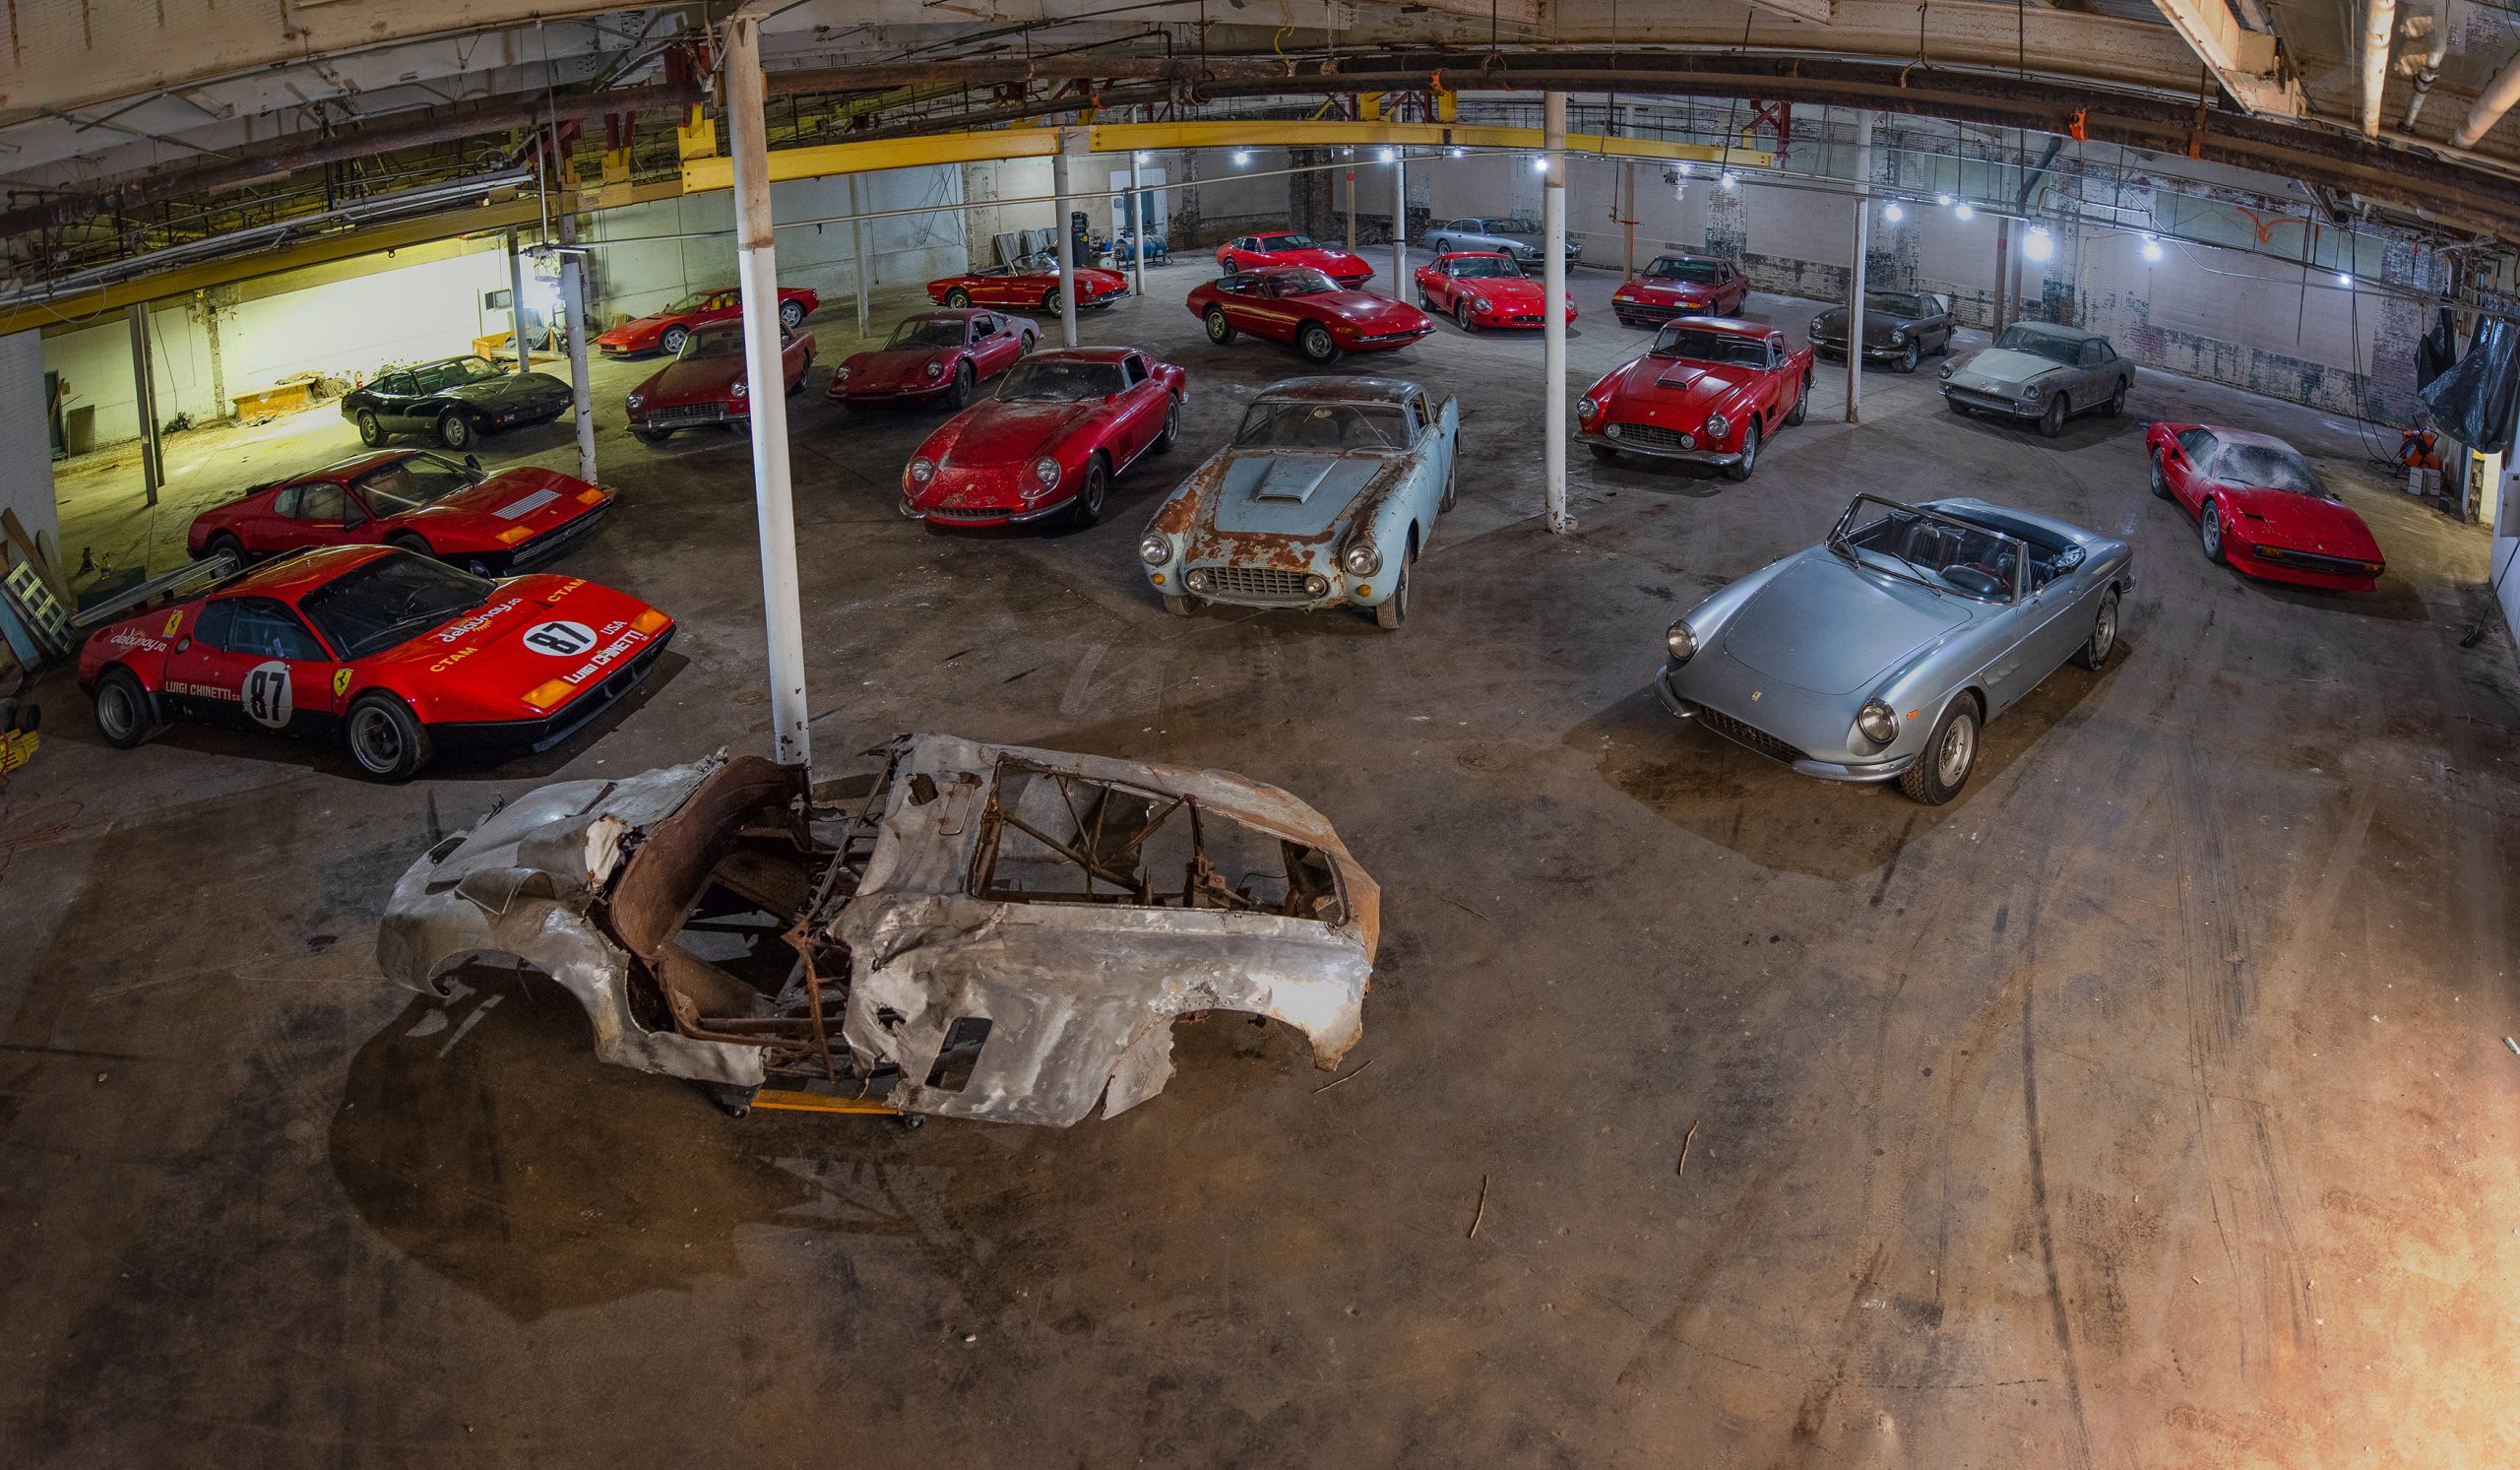 Barn find bonanza: 20 lost Ferraris surface at auction